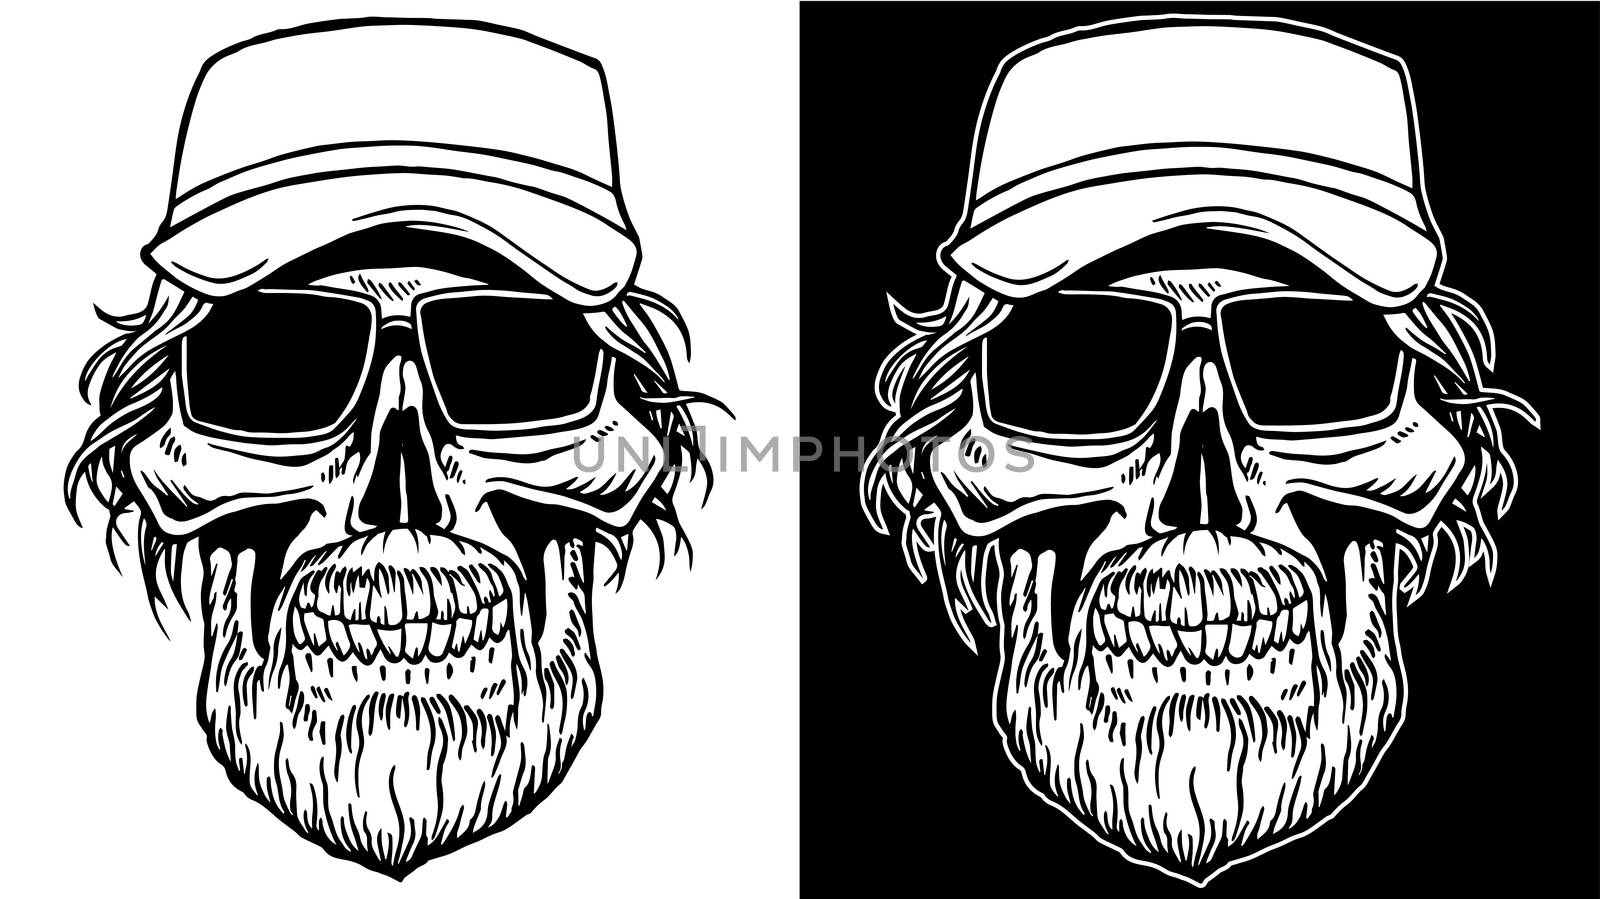 Black and White Line art of Skull with beard and sunglasses biker